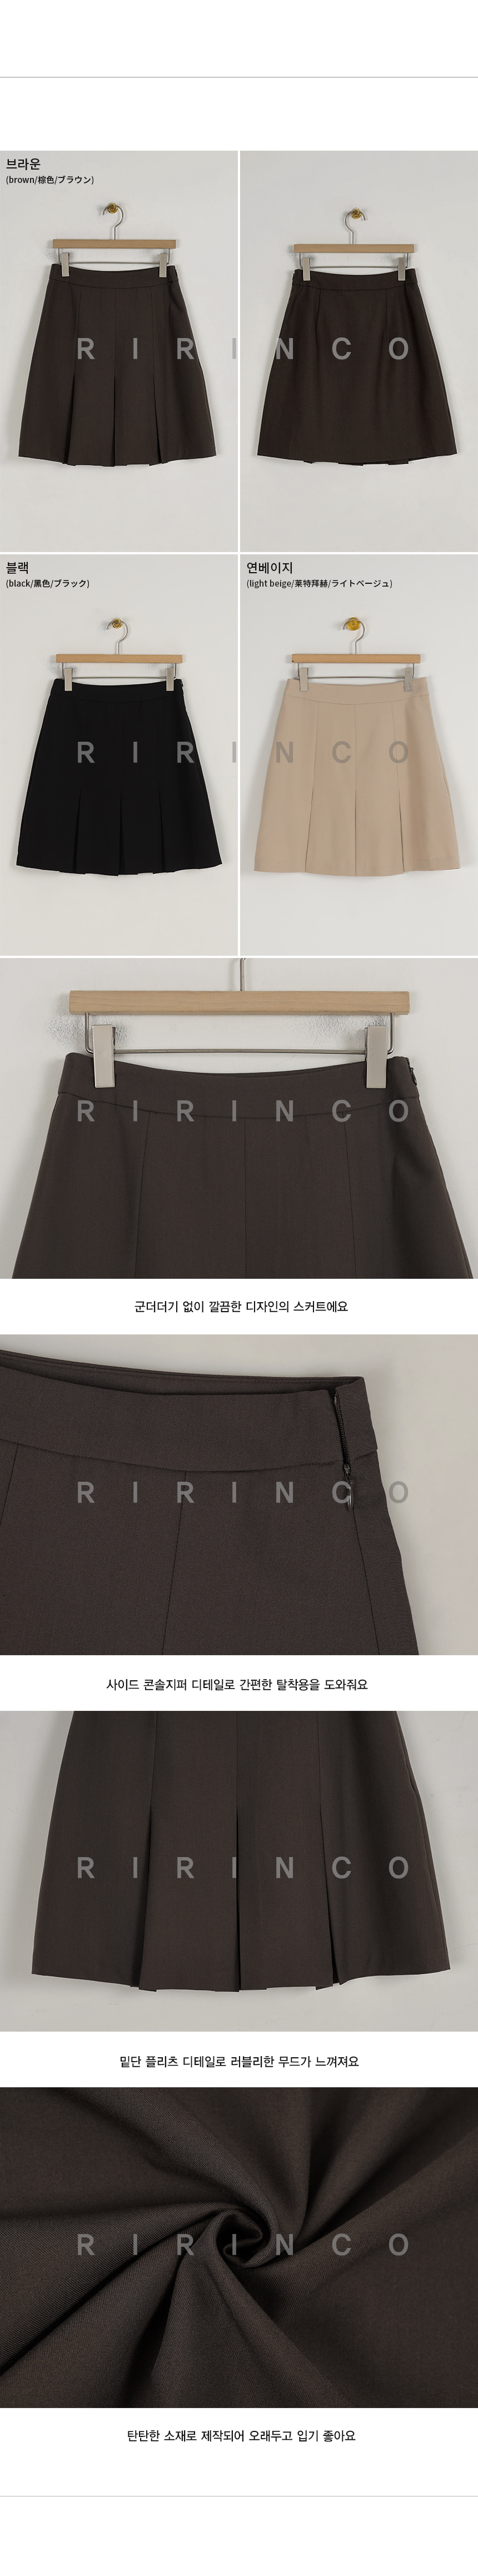 RIRINCO 2colorセットアッププリーツスカート